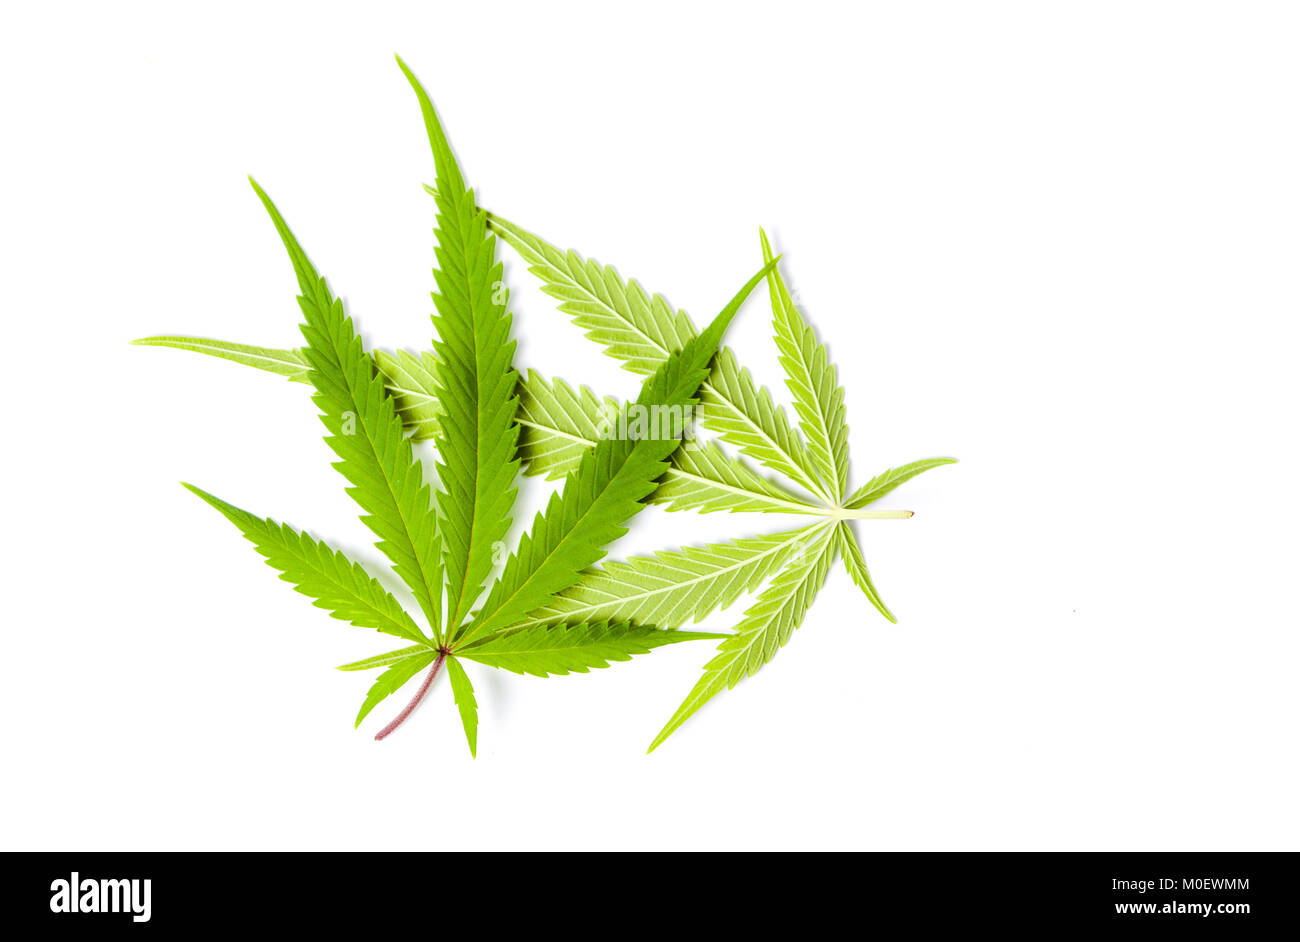 Marijuana green leafs isolated on white background Stock Photo